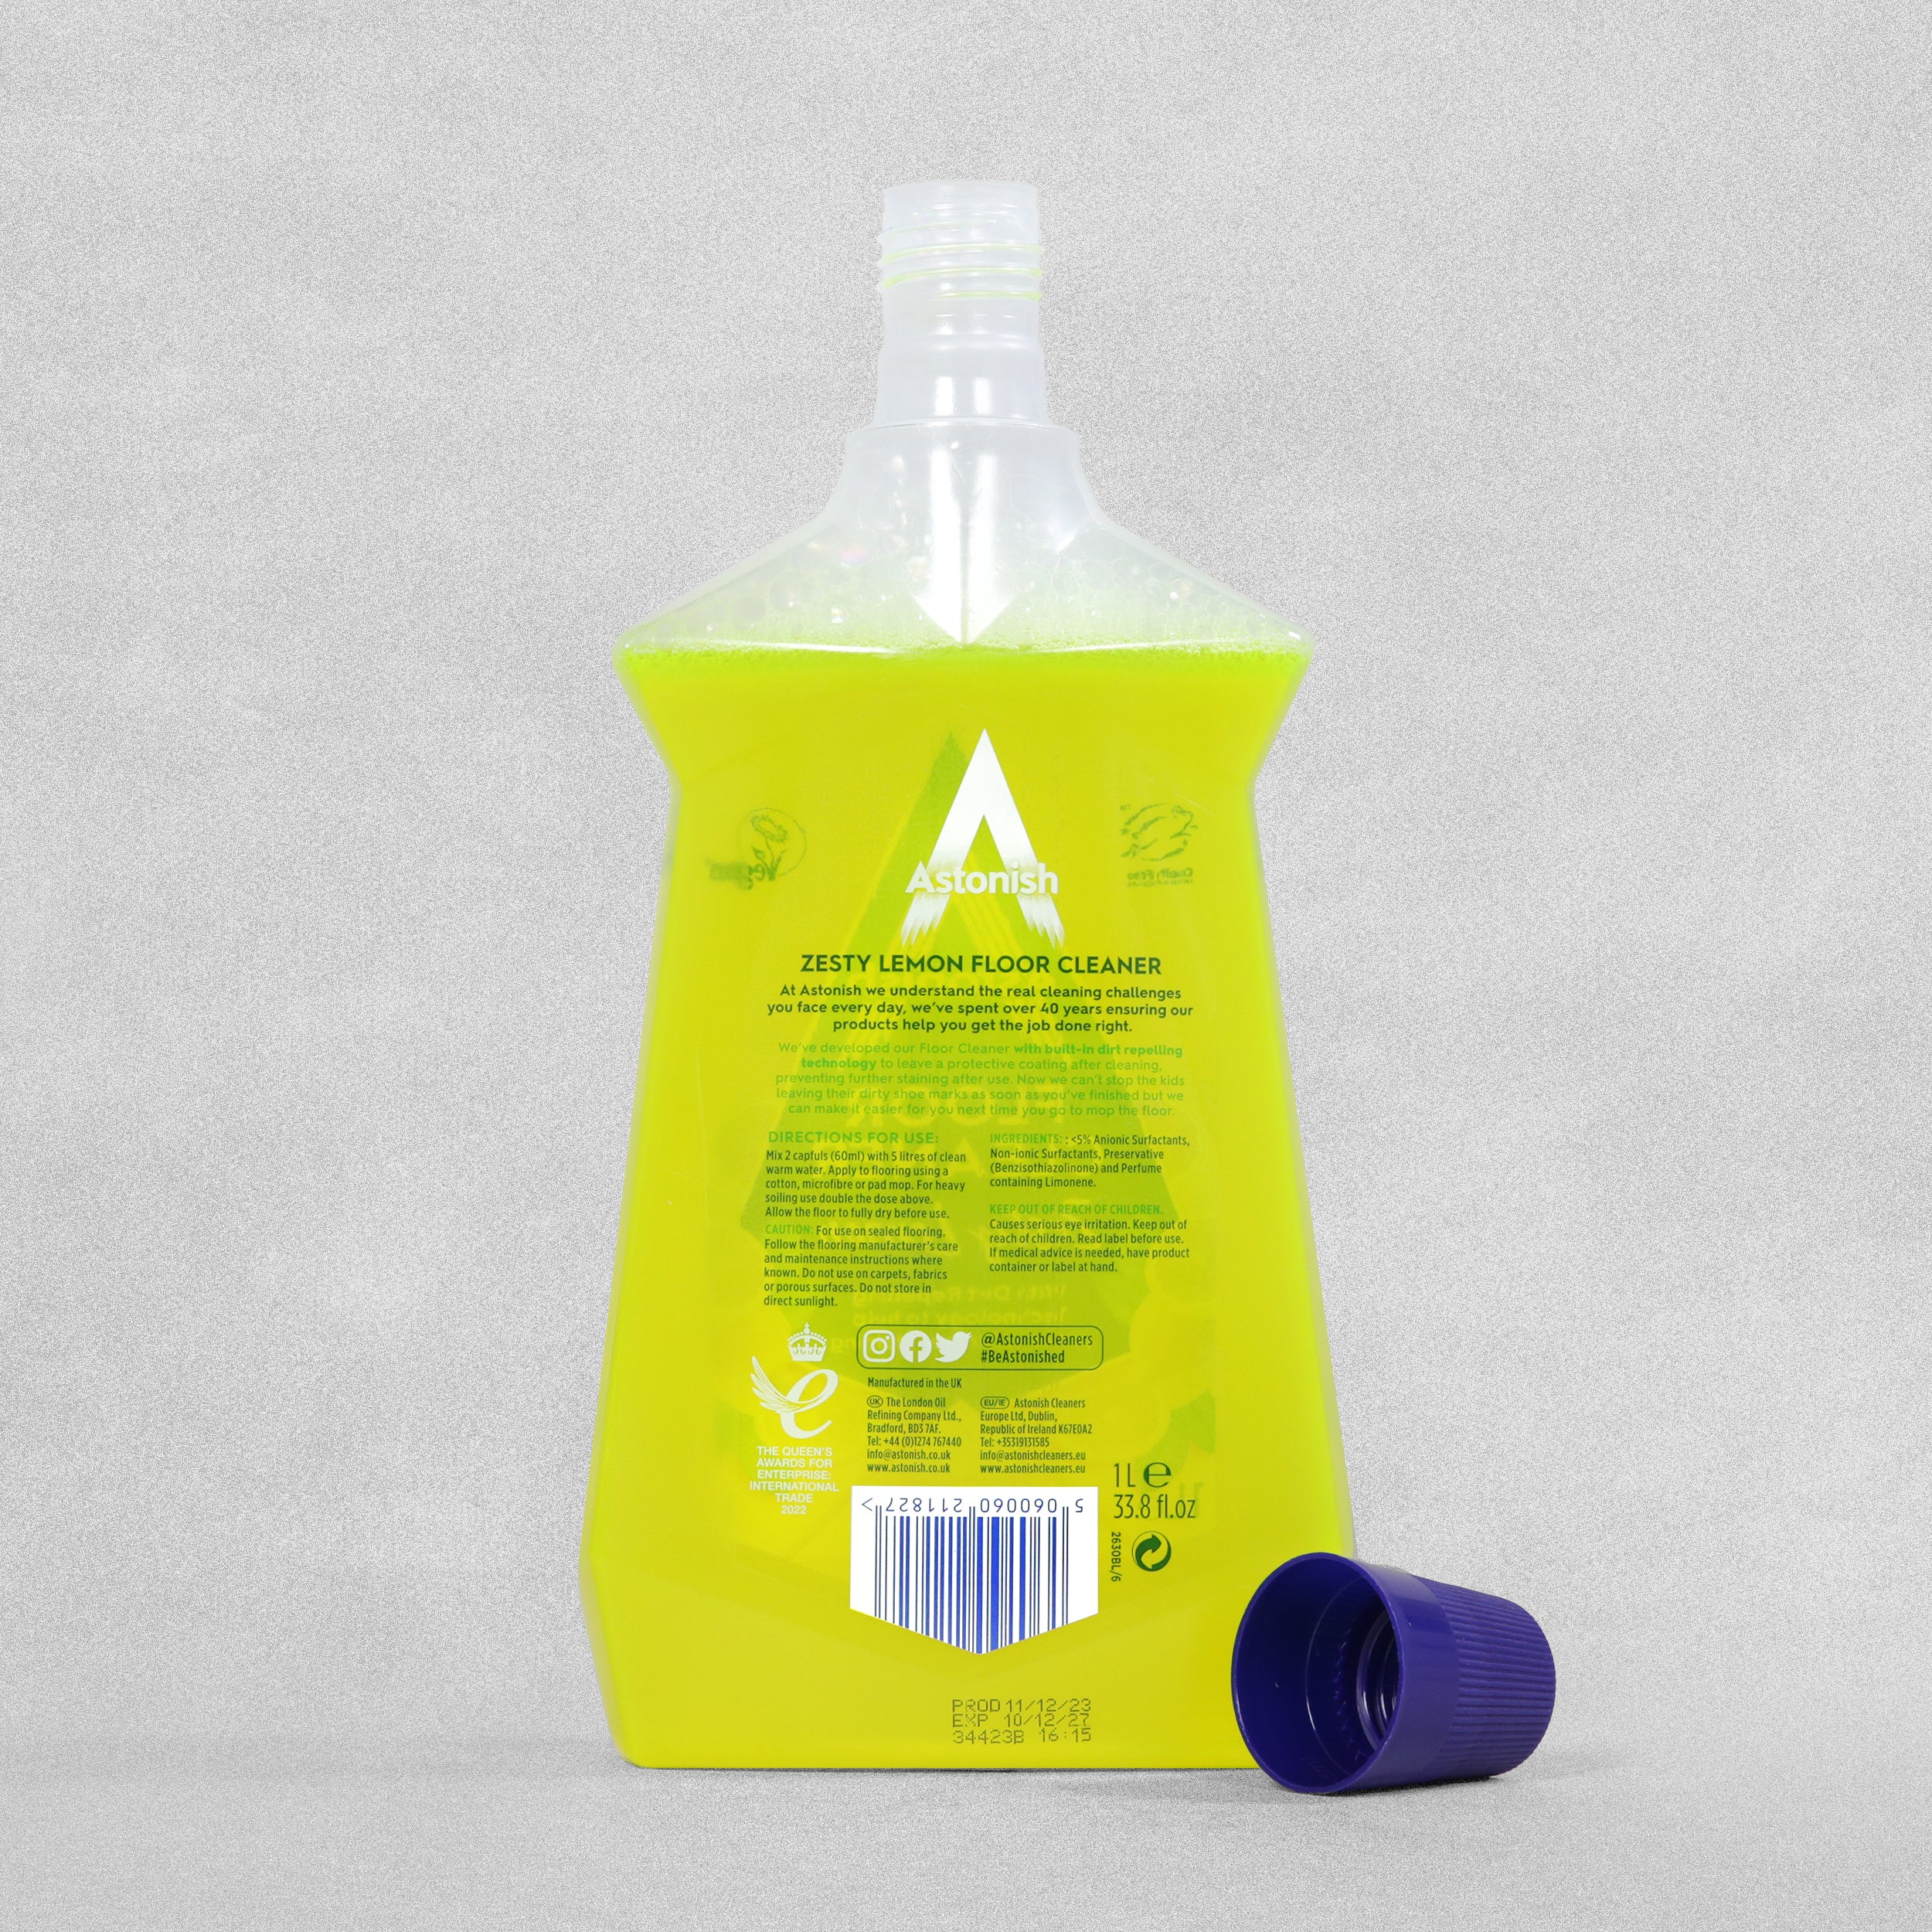 Astonish Zesty Lemon Floor Cleaner - 1 litre